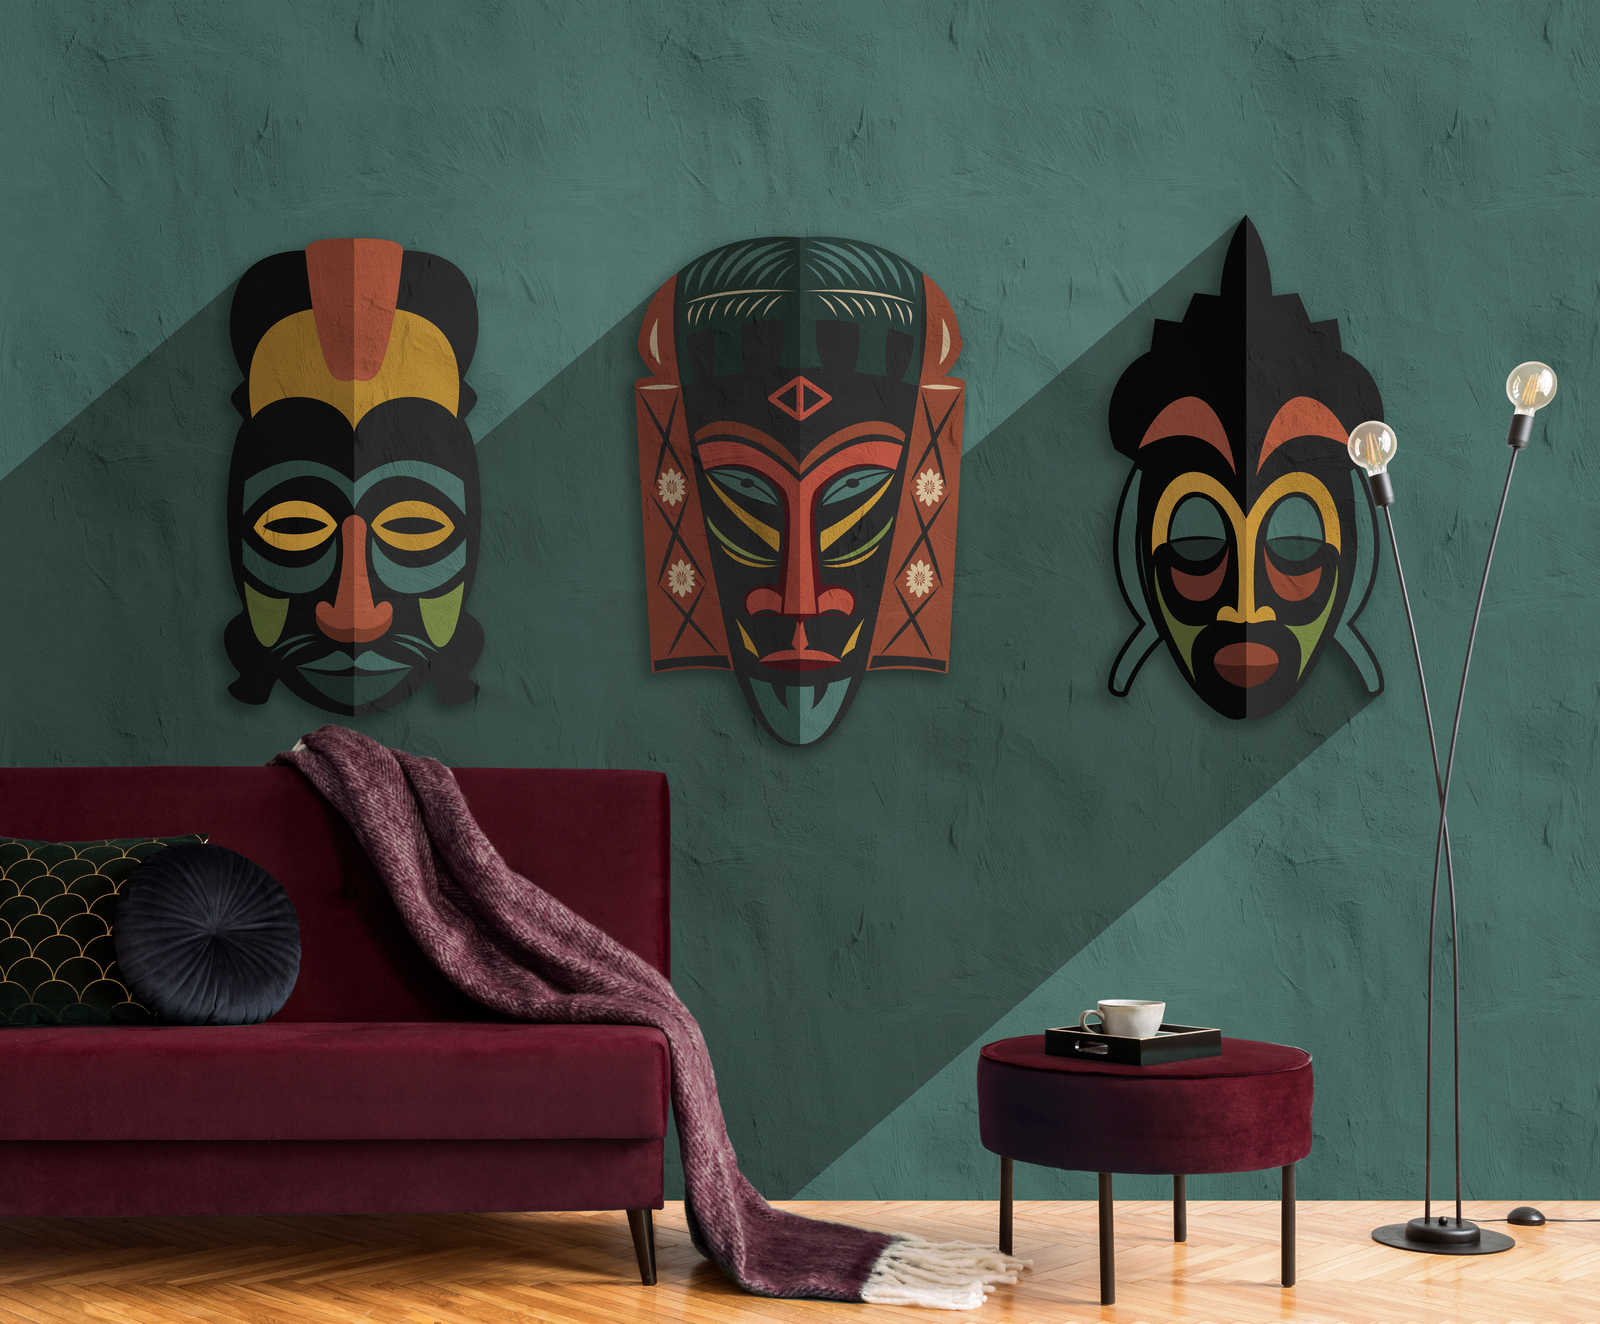             Zulu 3 – Fototapete Petrol Afrika Masken Zulu Design
        